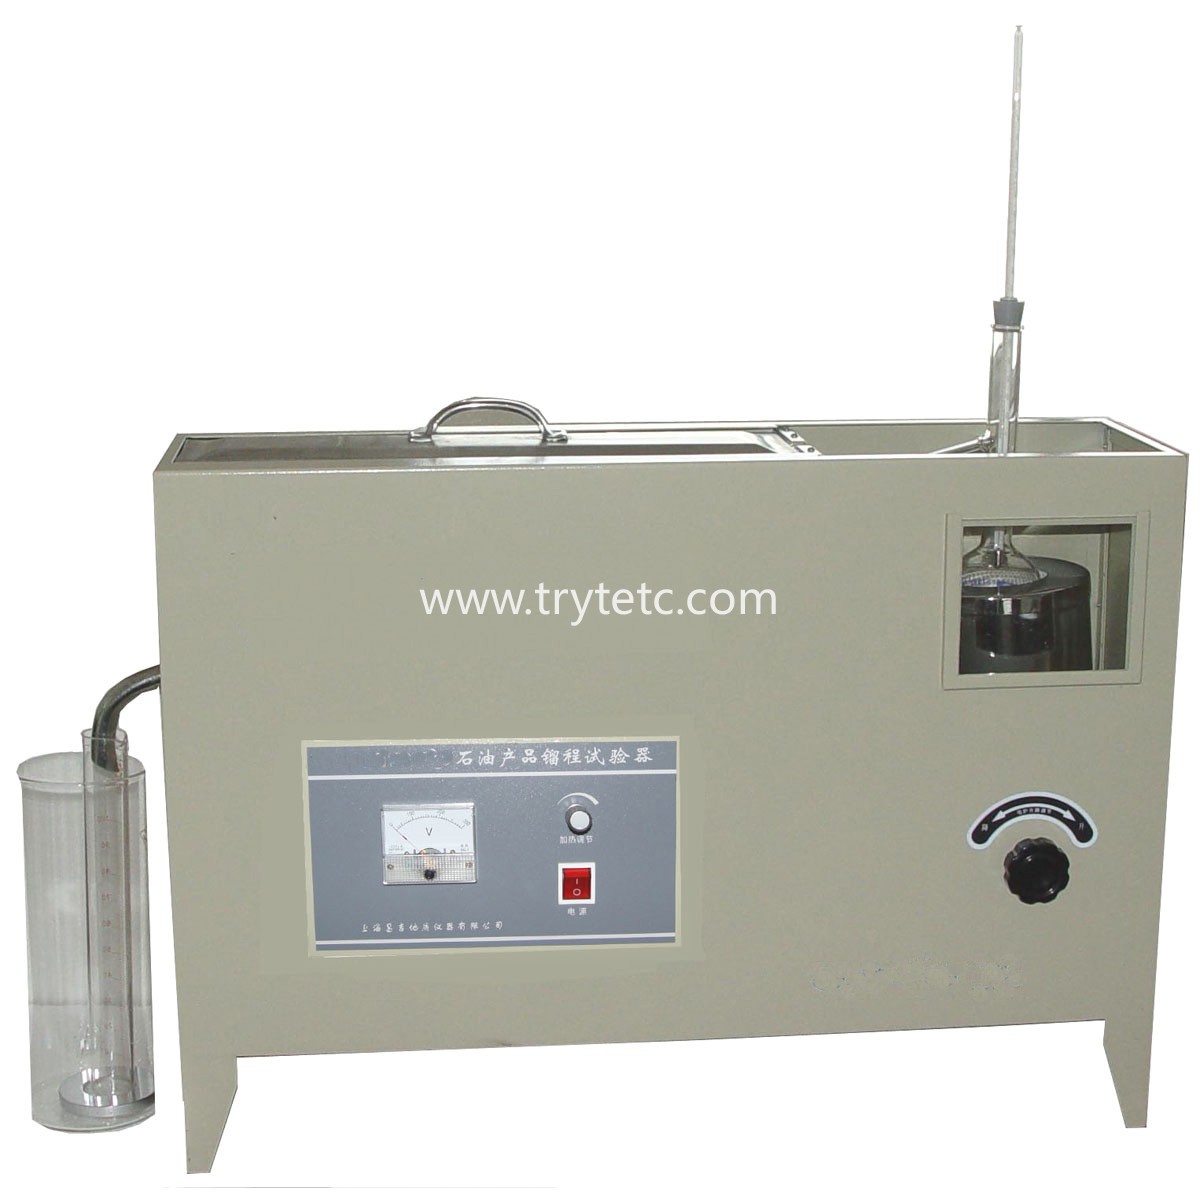 TR-TC-255 Distillation Apparatus